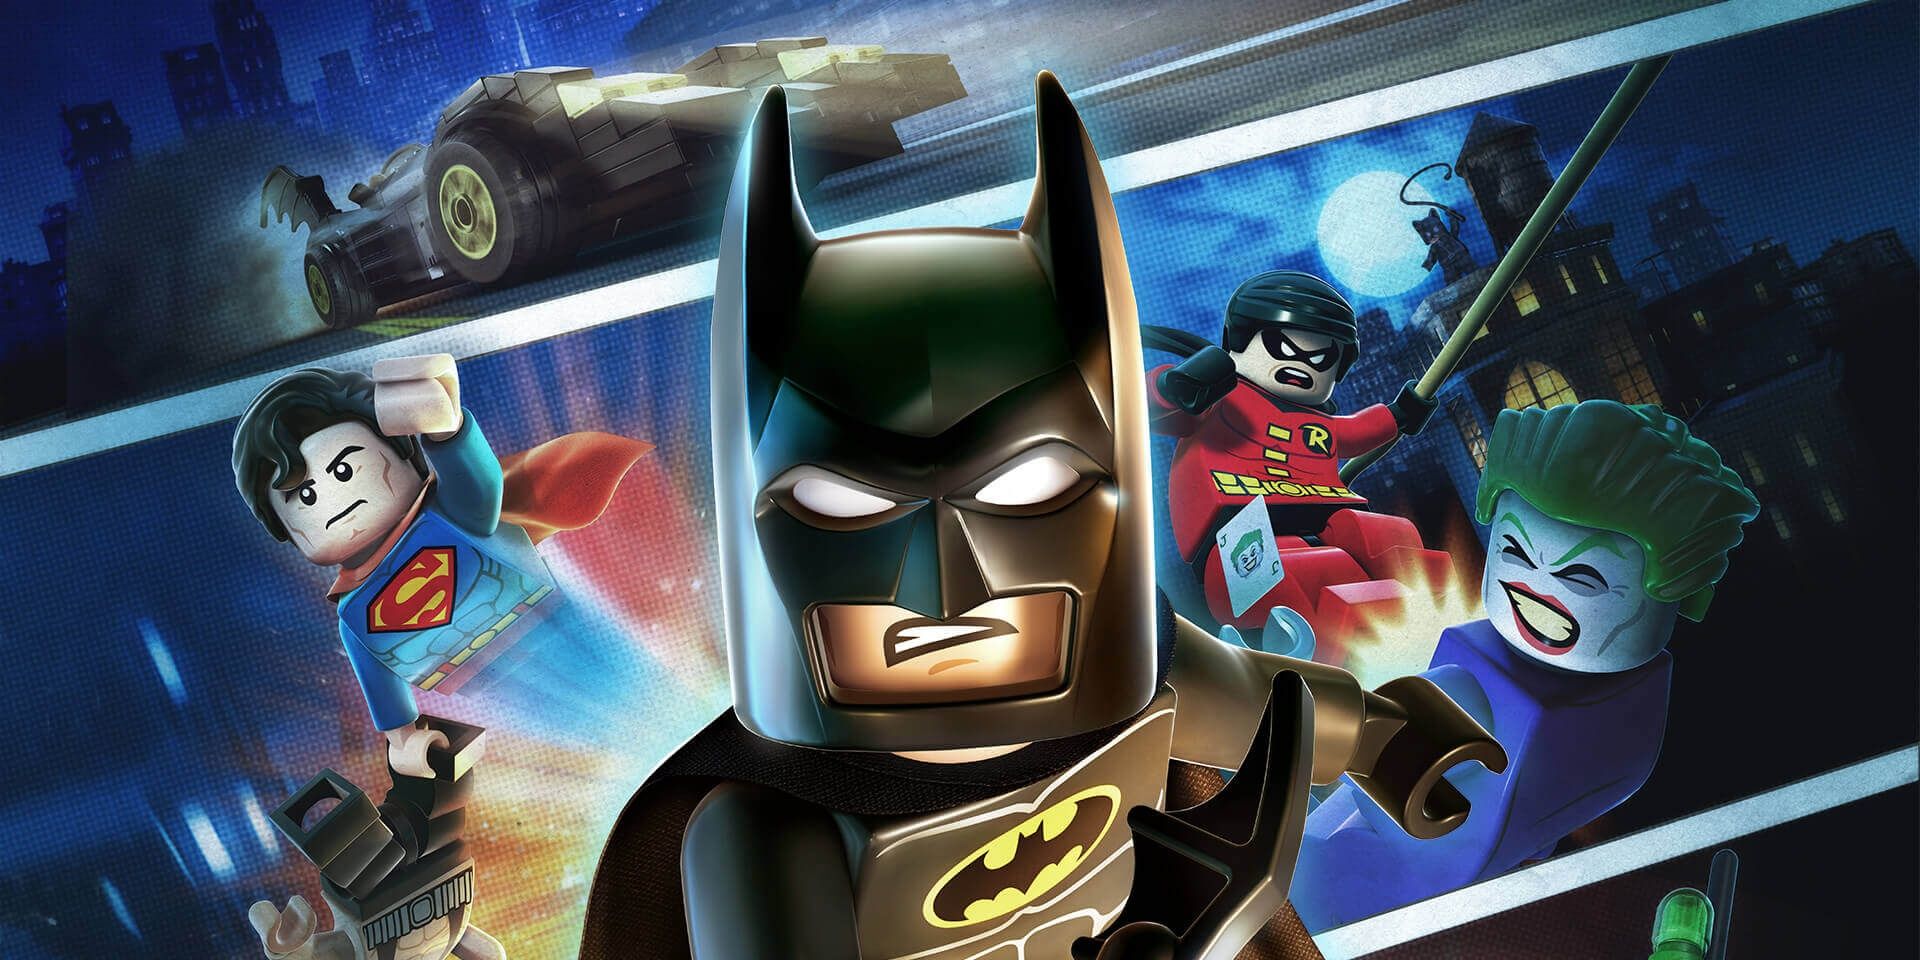 The promo poster for Lego Batman 2 DC Superheroes, showing Batman, Superman, Robin, and the Joker.